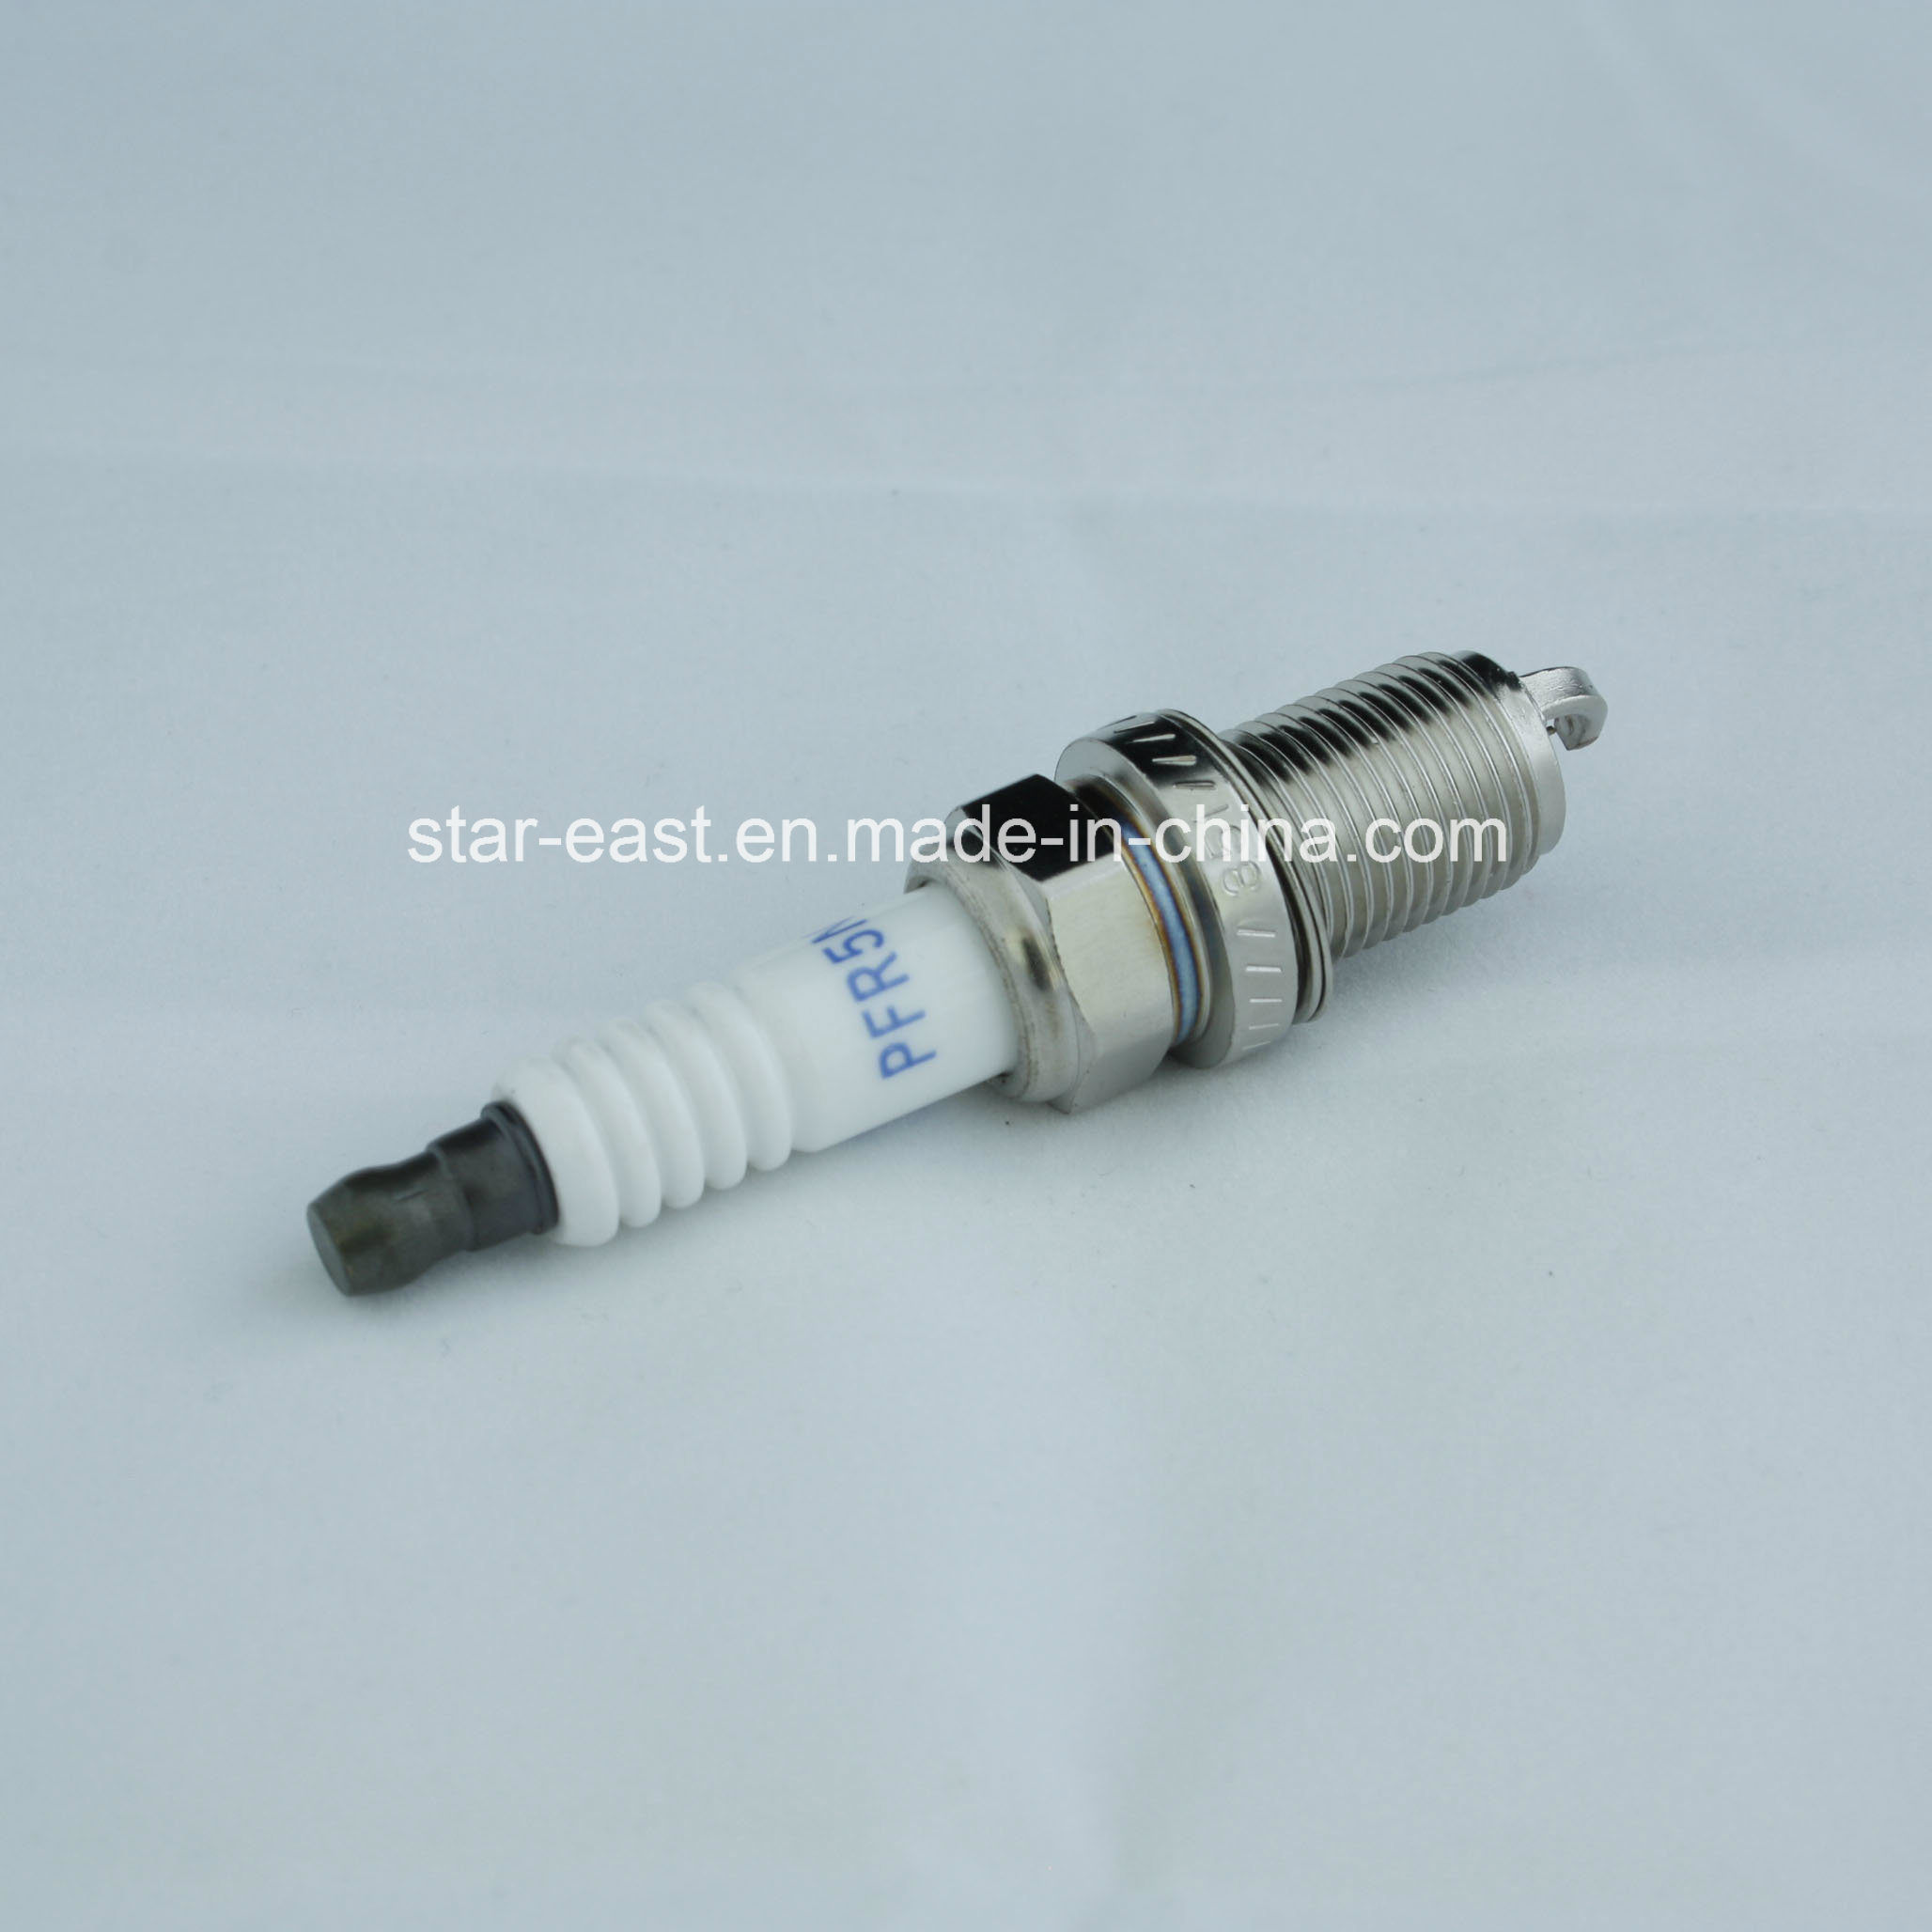 Hight Quality Spark Plug for Hundai/KIA 18814-11051